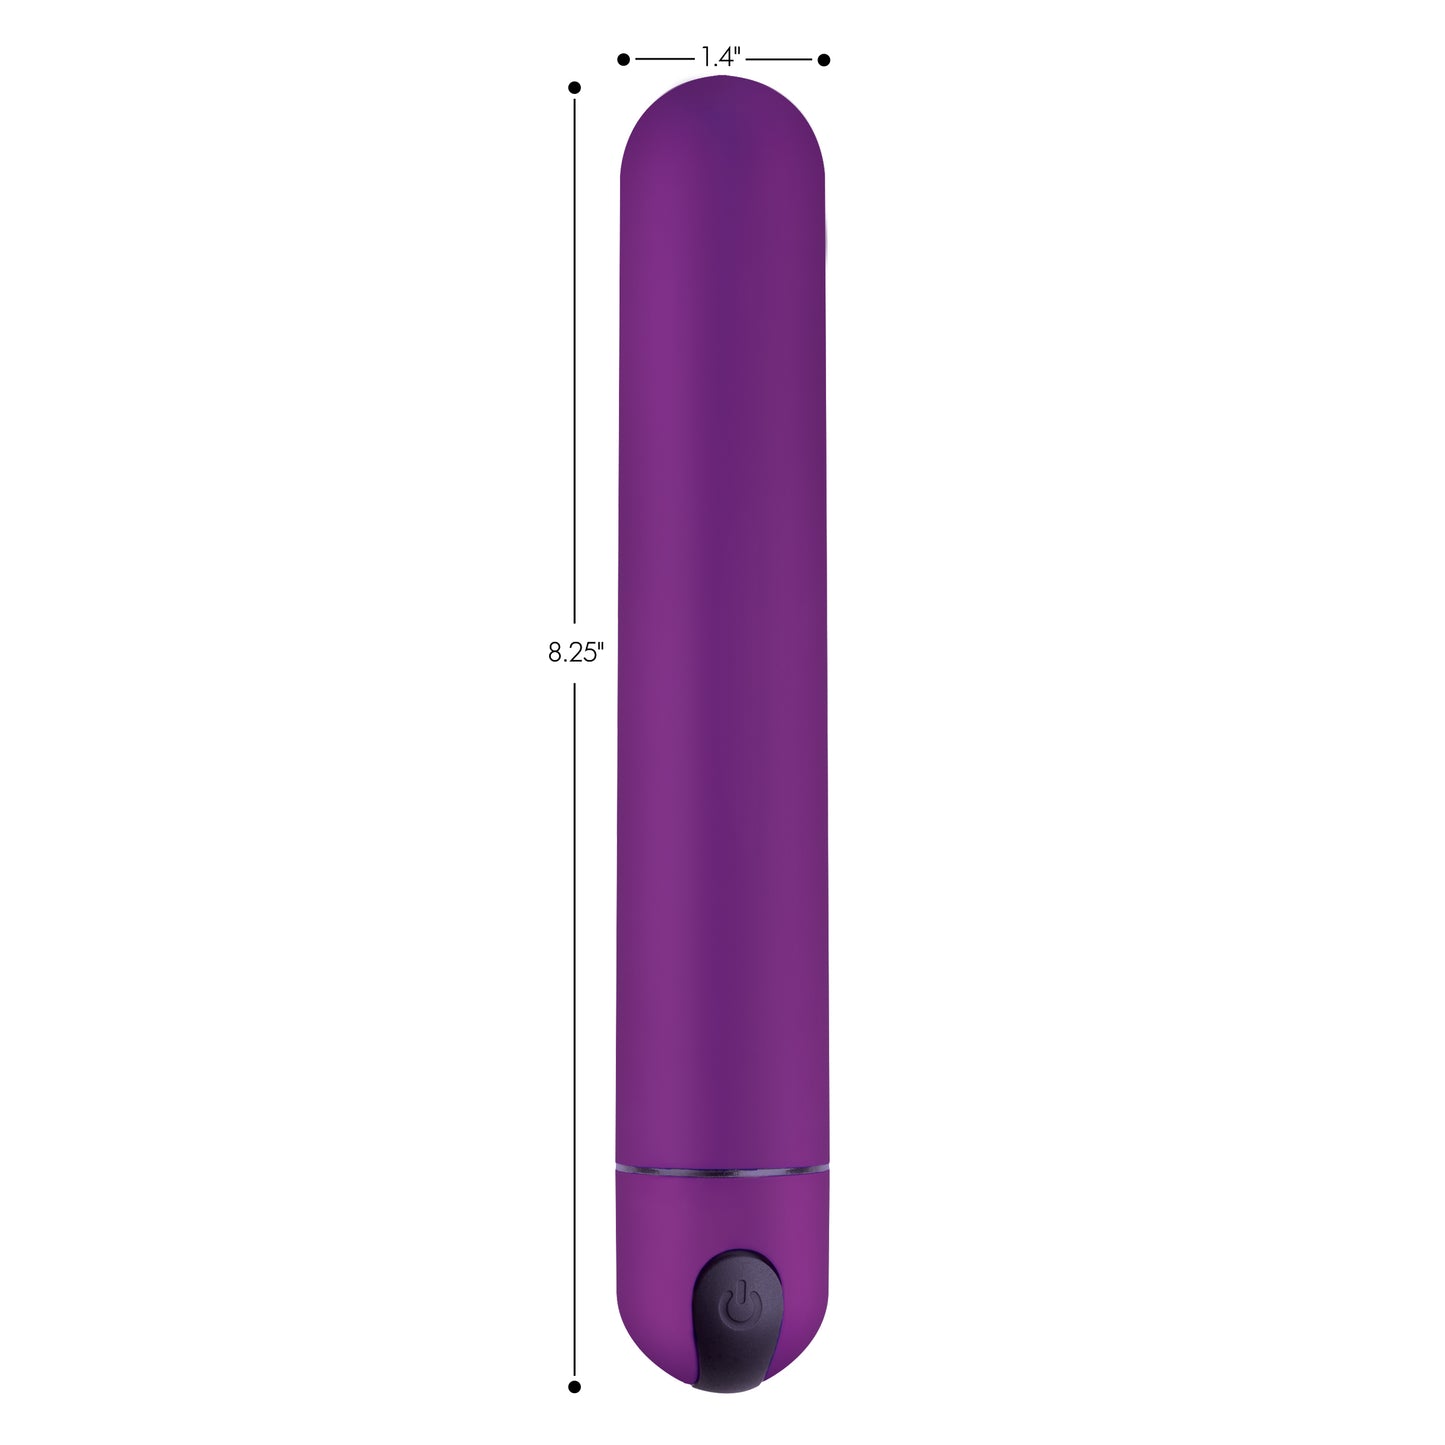 XL Bullet Vibrator - Purple - UABDSM